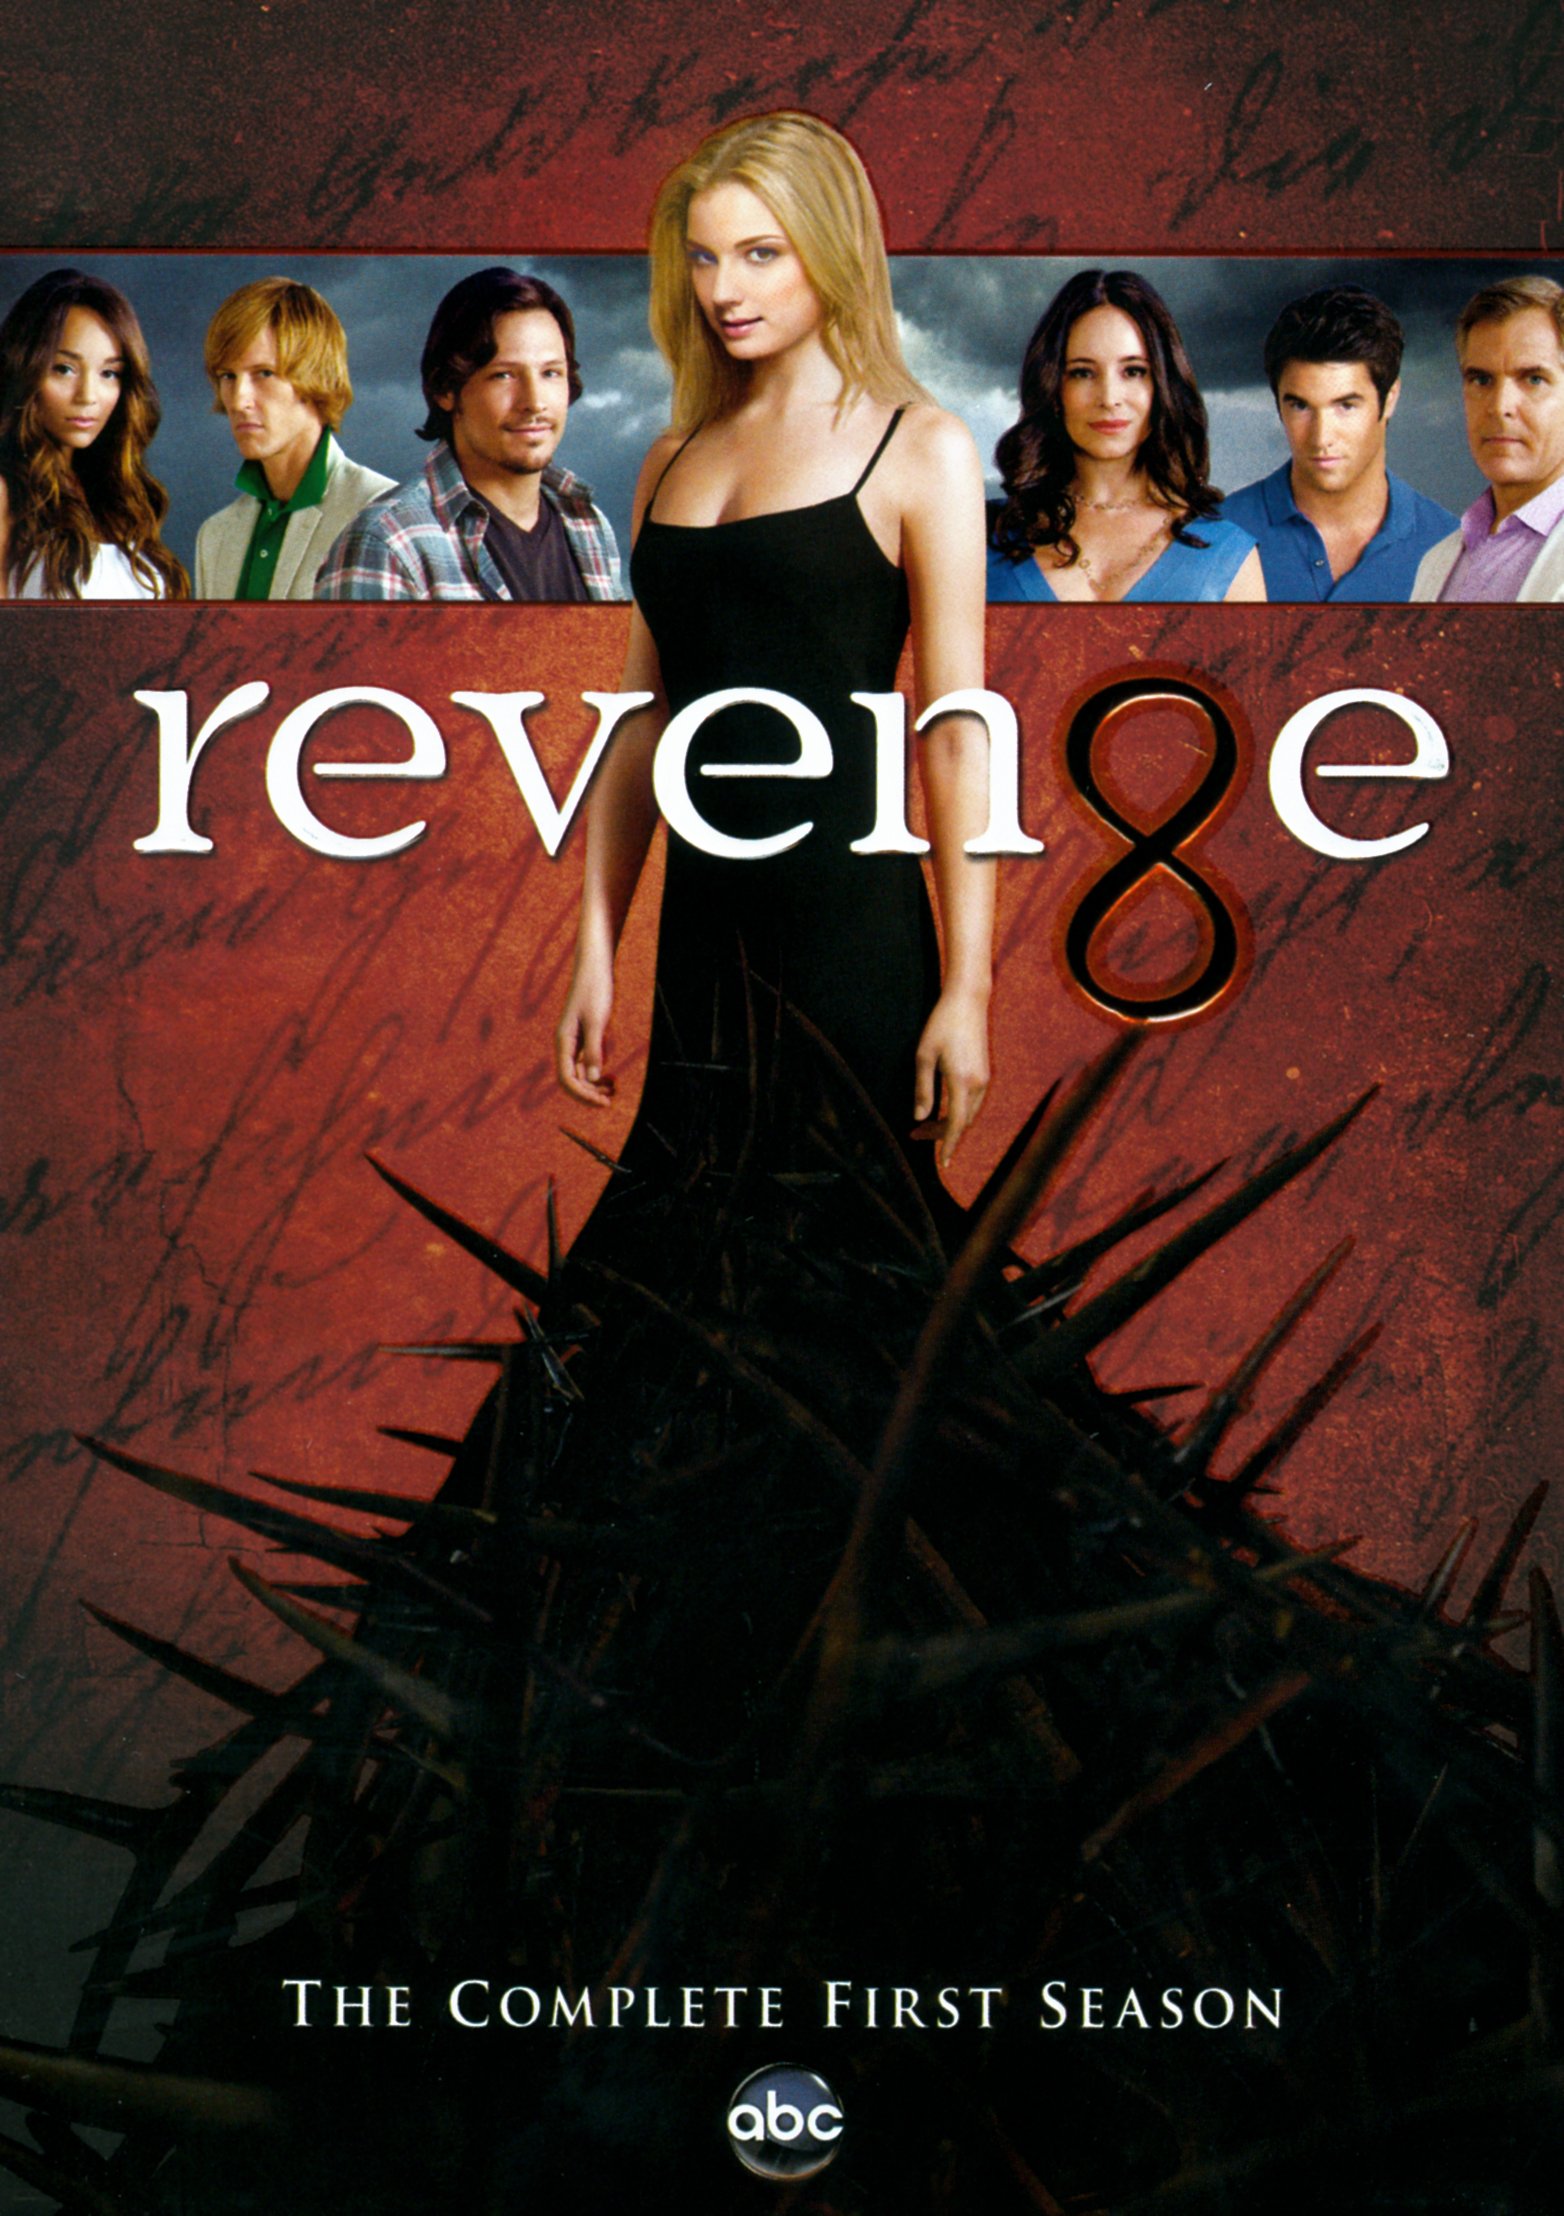 Revenge (season 1) - Wikipedia